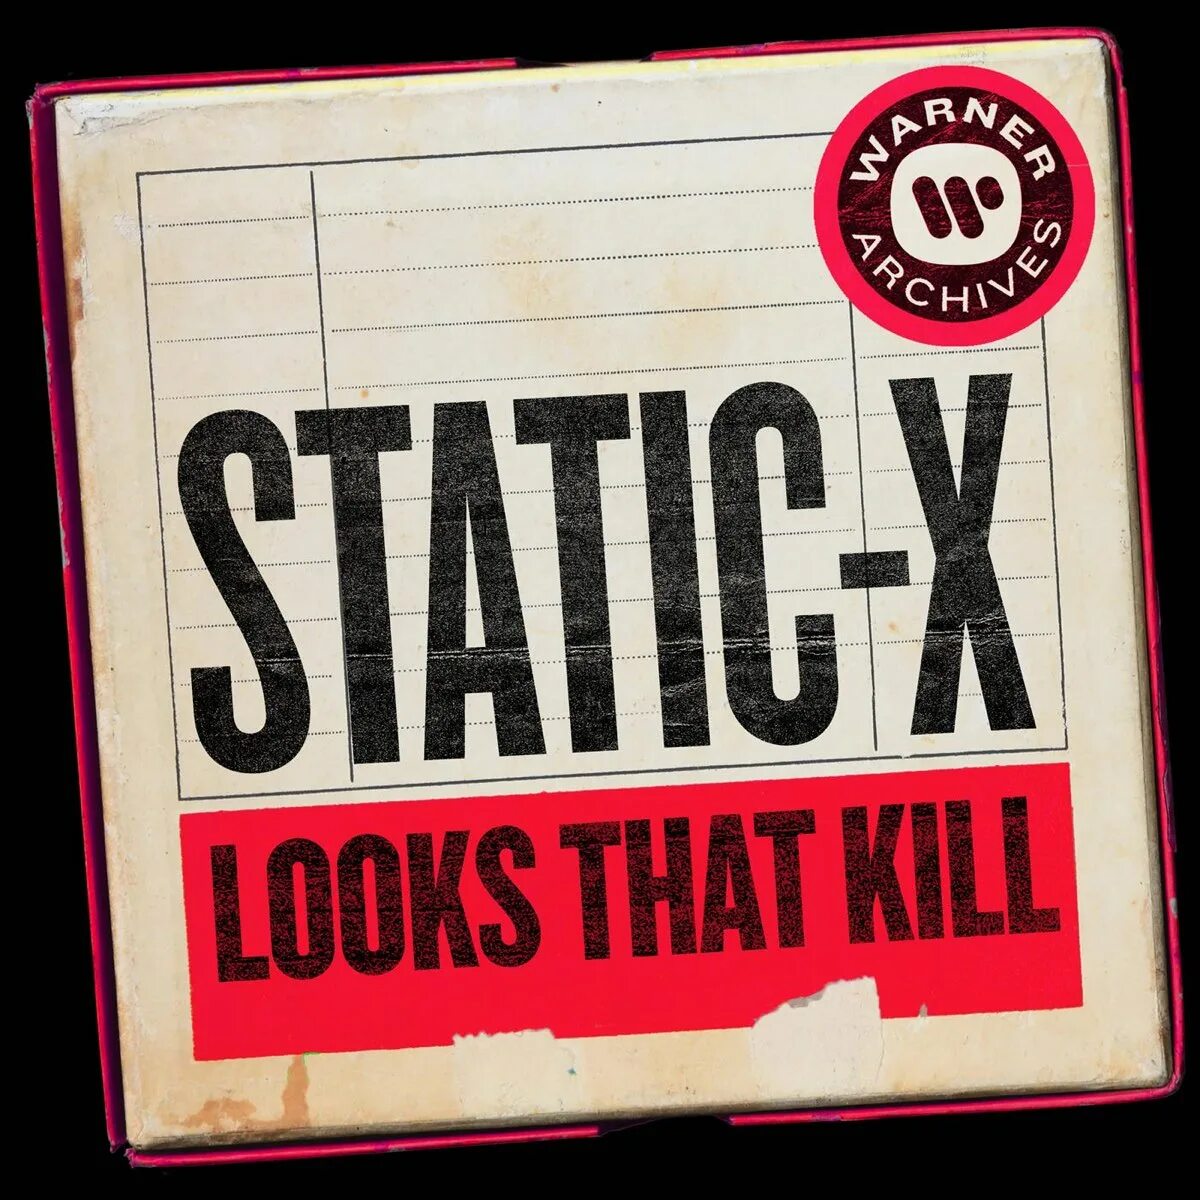 Static x Band. Static x логотип. Static x изображения. Kill status. Single state